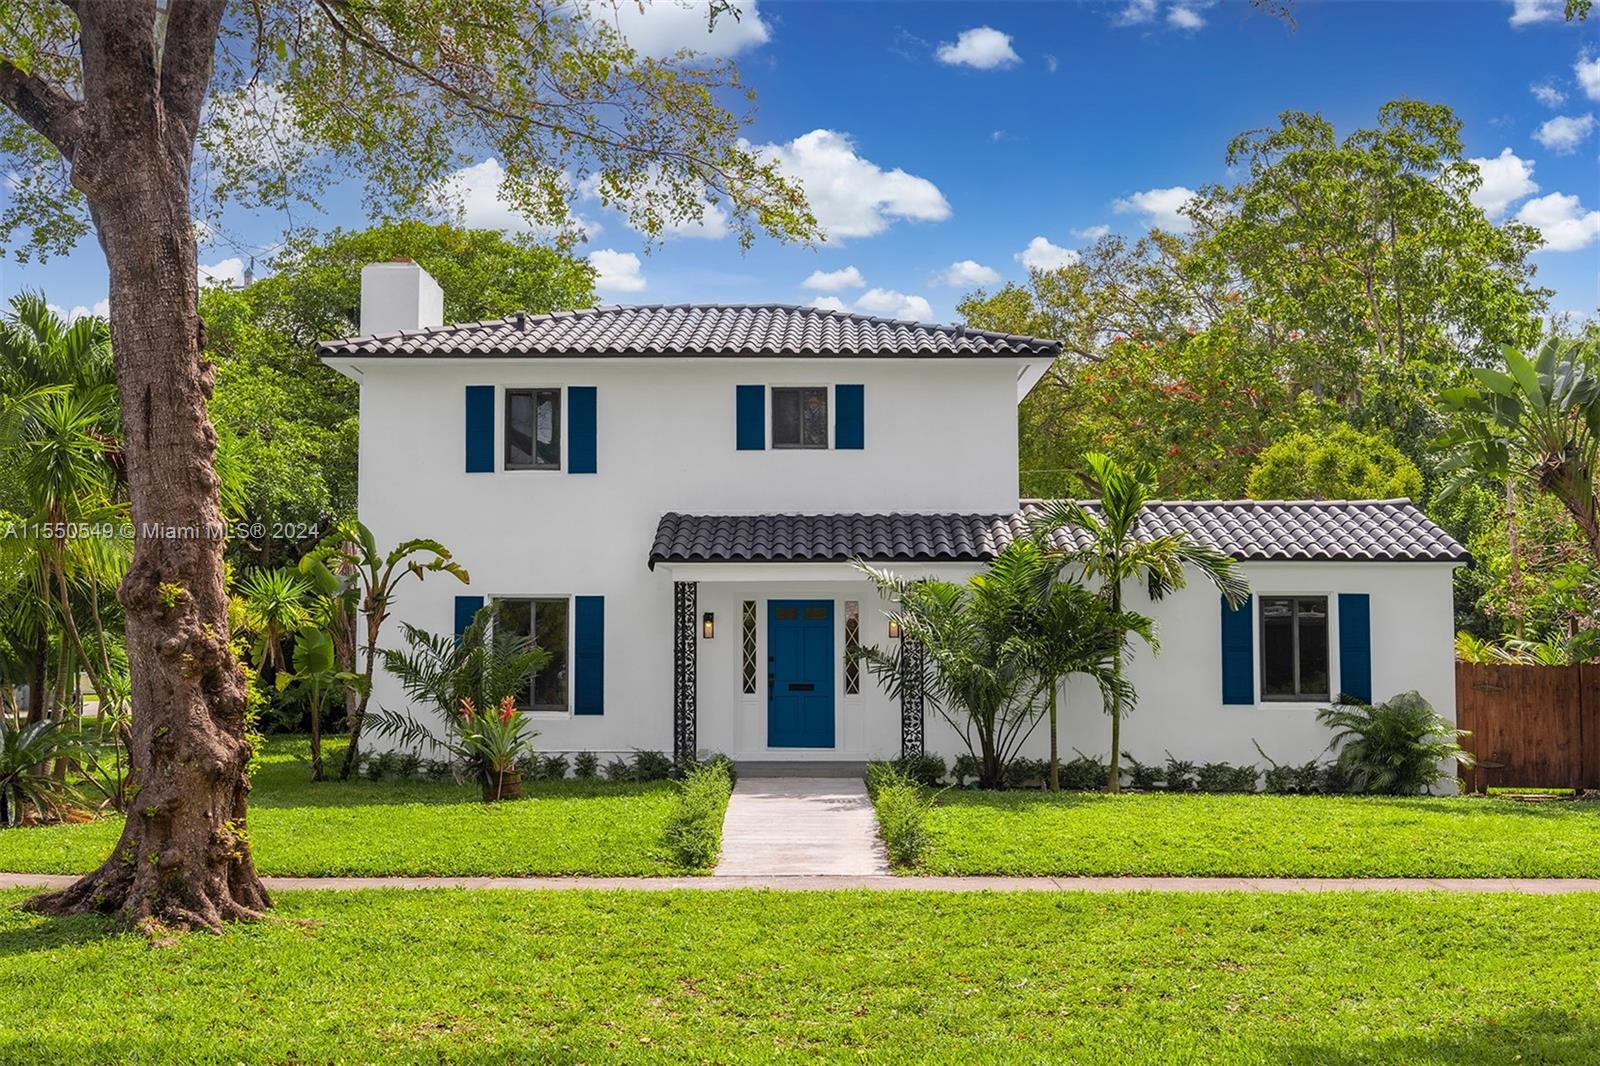 Property for Sale at 390 Ne 93rd St, Miami Shores, Miami-Dade County, Florida - Bedrooms: 4 
Bathrooms: 5  - $2,695,000